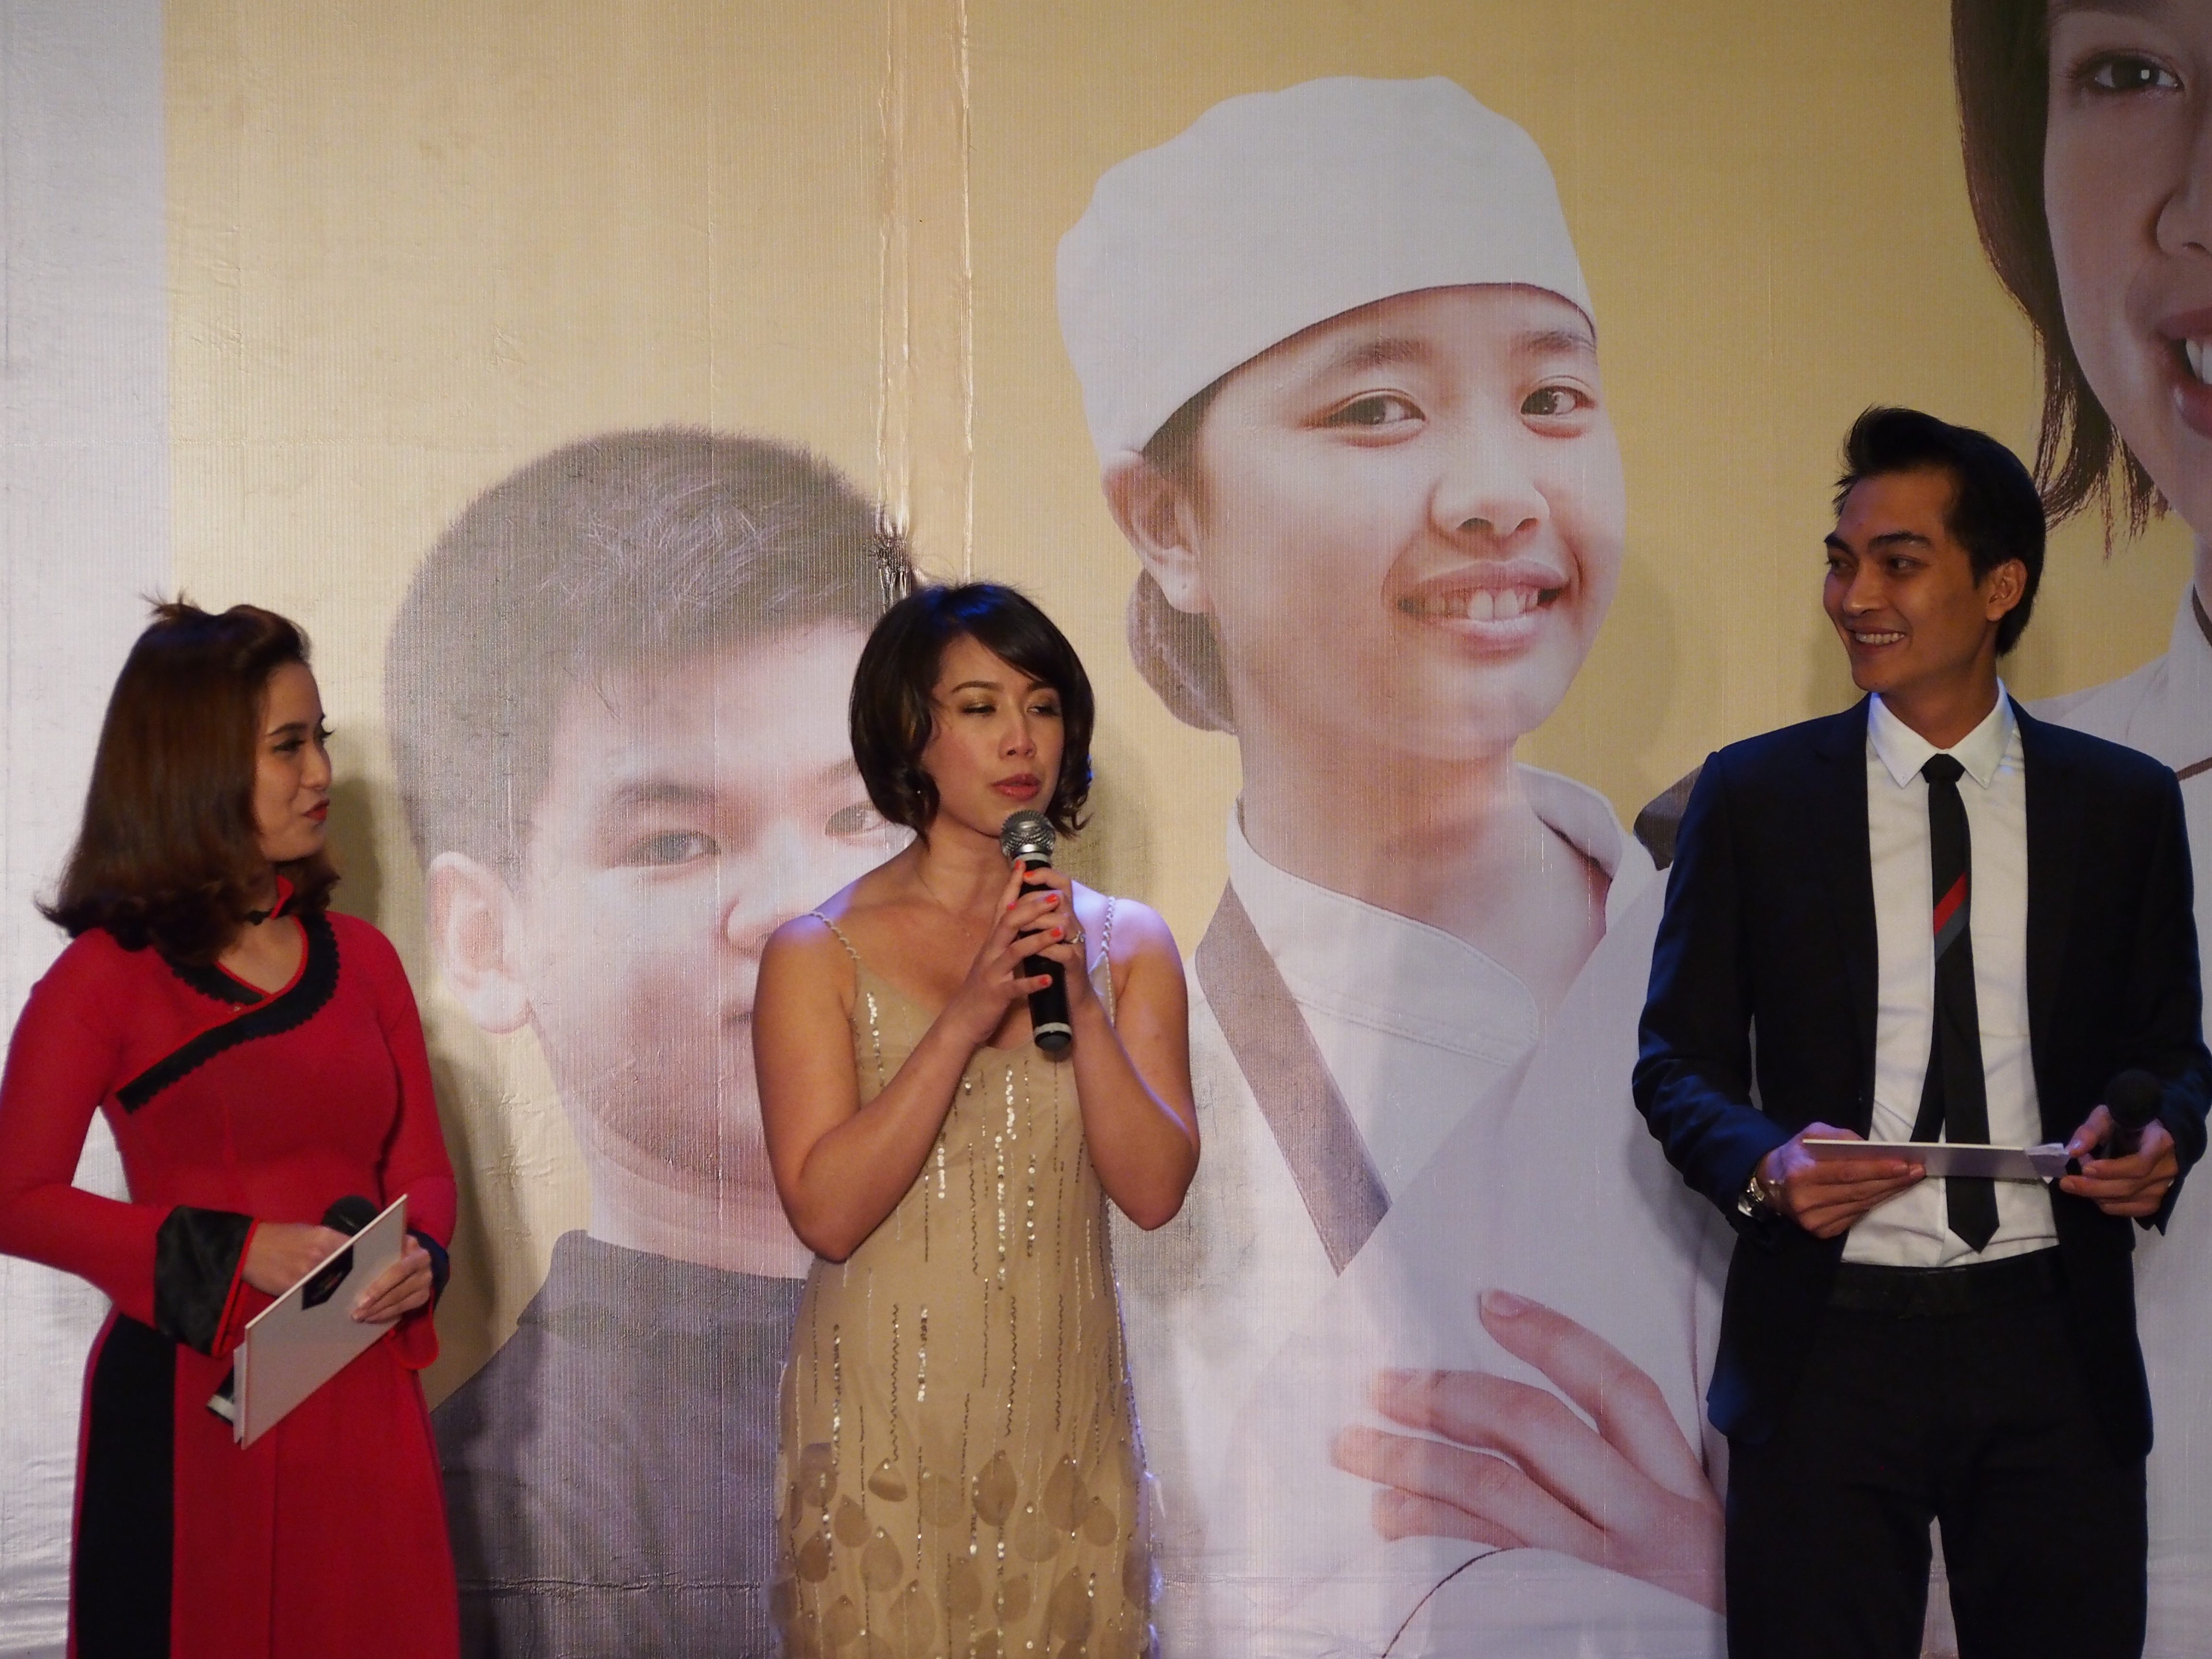 MasterChef winner Christine Ha helps raise money for disadvantaged youth in Vietnam